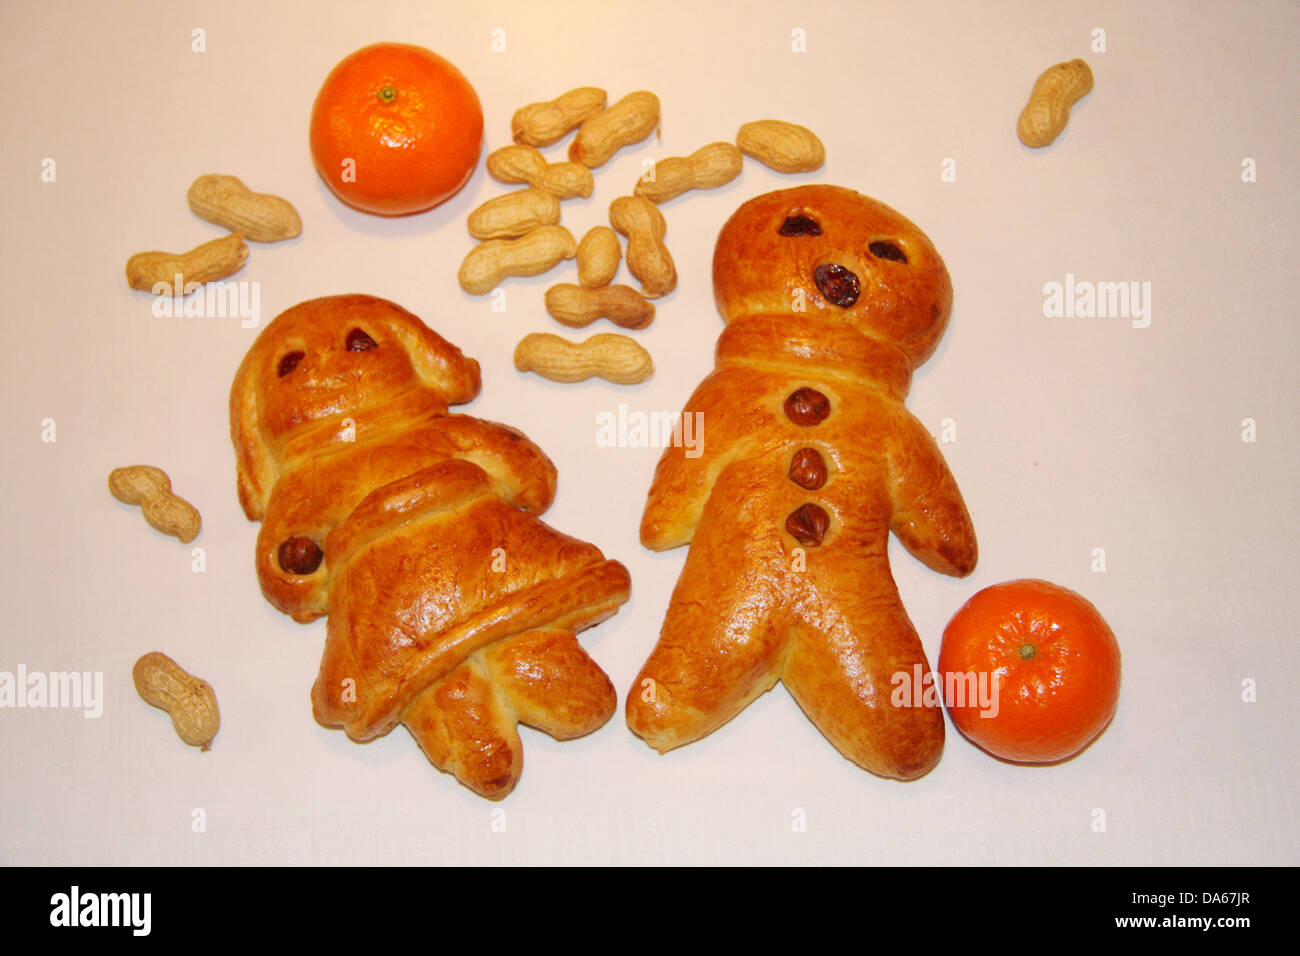 Baking, eating, figure, Grittibänz, Krampus, Weckenmann, Hefegebäckg, pastry, cake, figures, Santa Claus, Advent, Christmas, tan Stock Photo